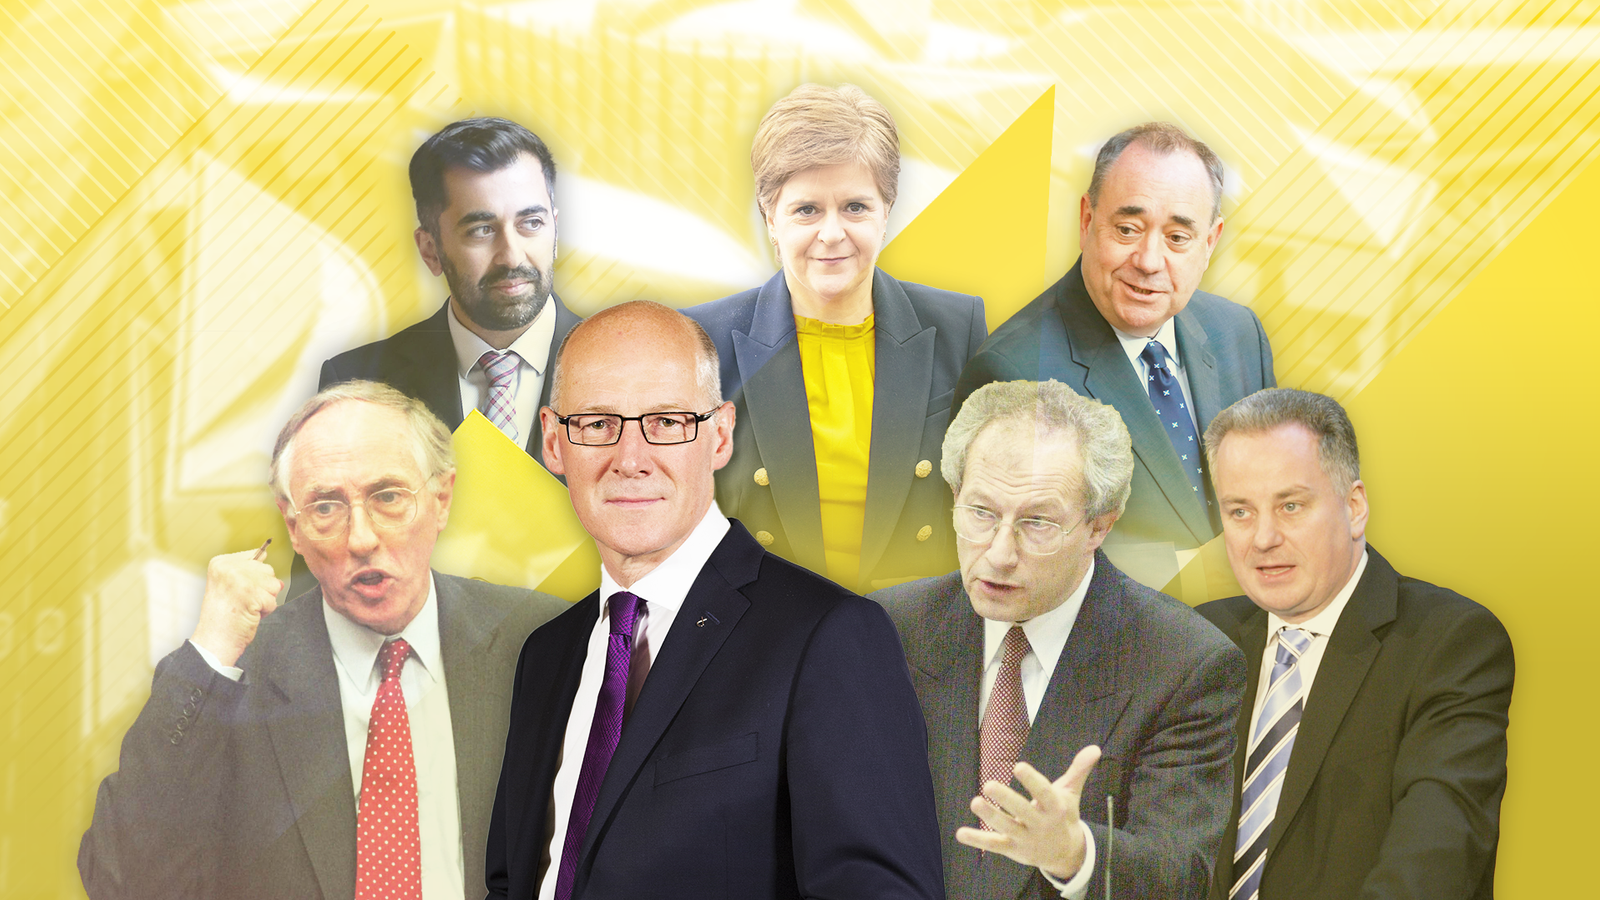 The twenty fifth anniversary of the Scottish parliament